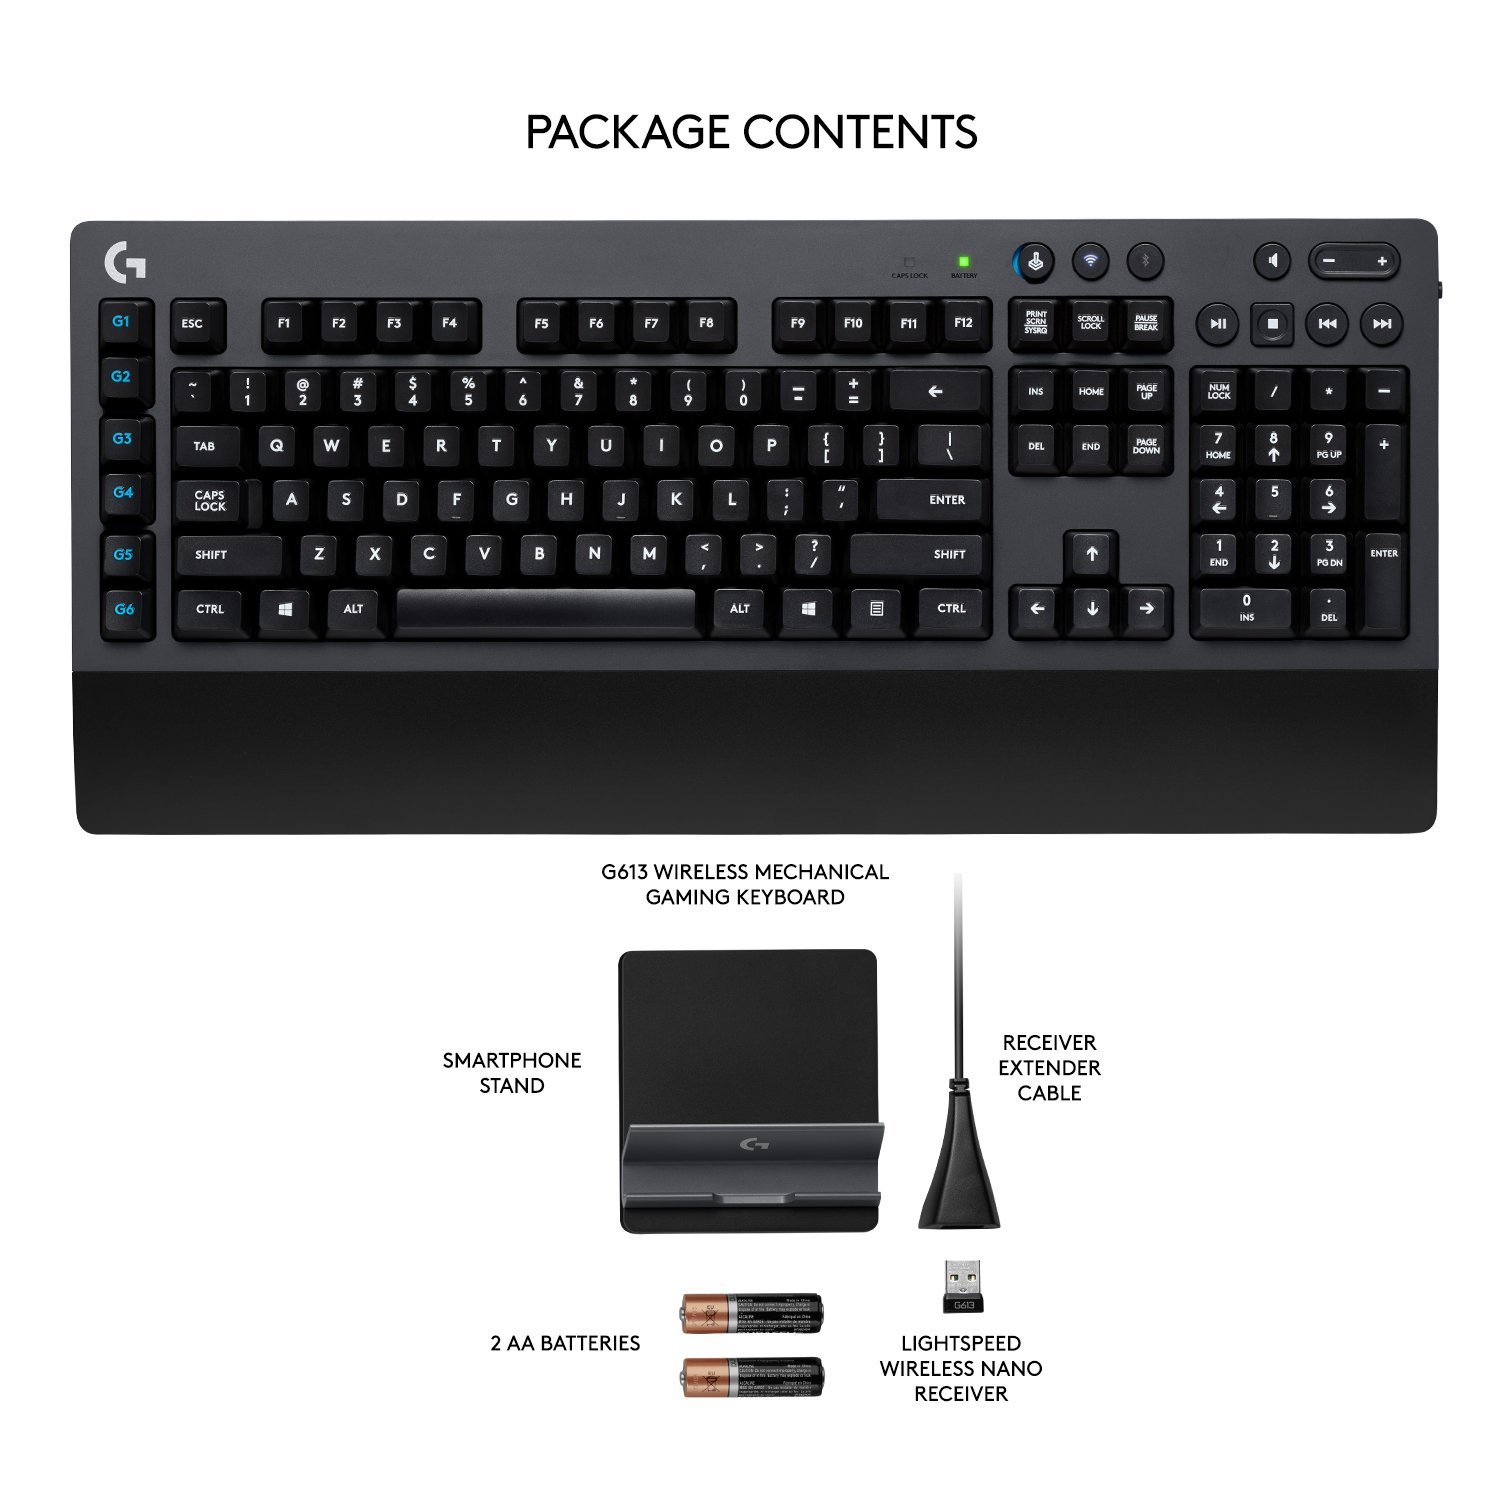 G613 Wireless Gaming Keyboard Review